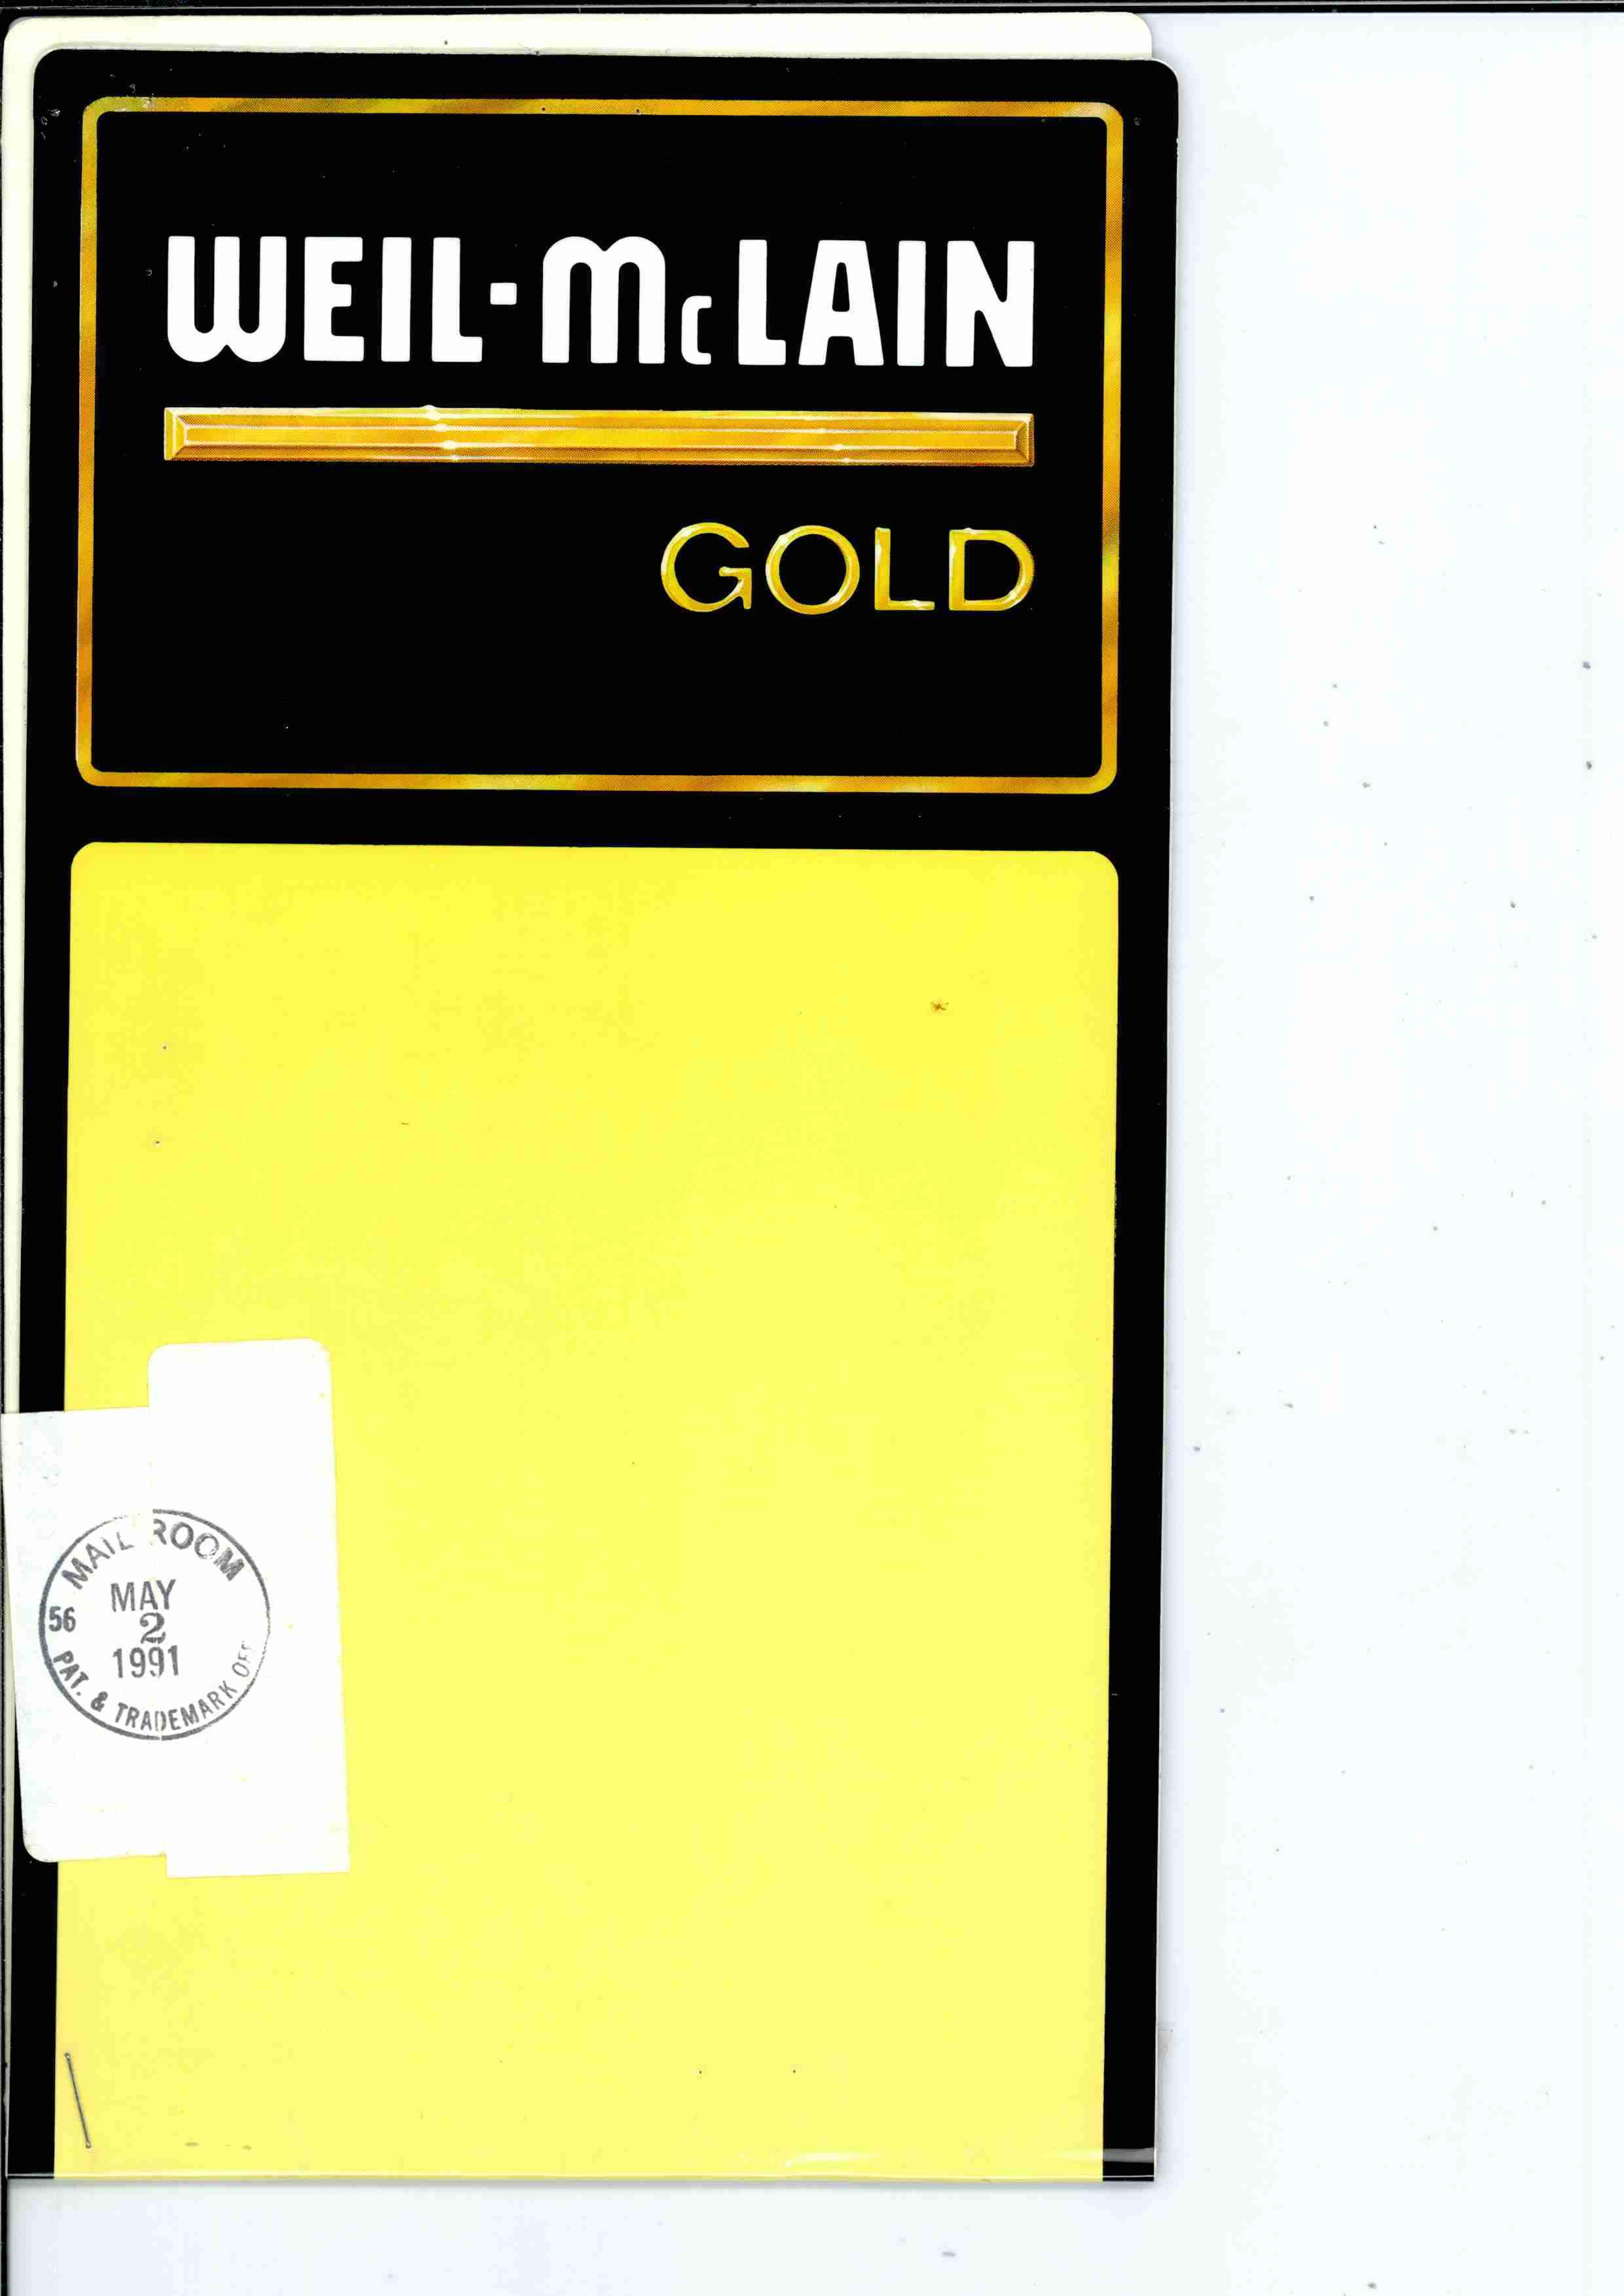  WEIL-MCLAIN GOLD